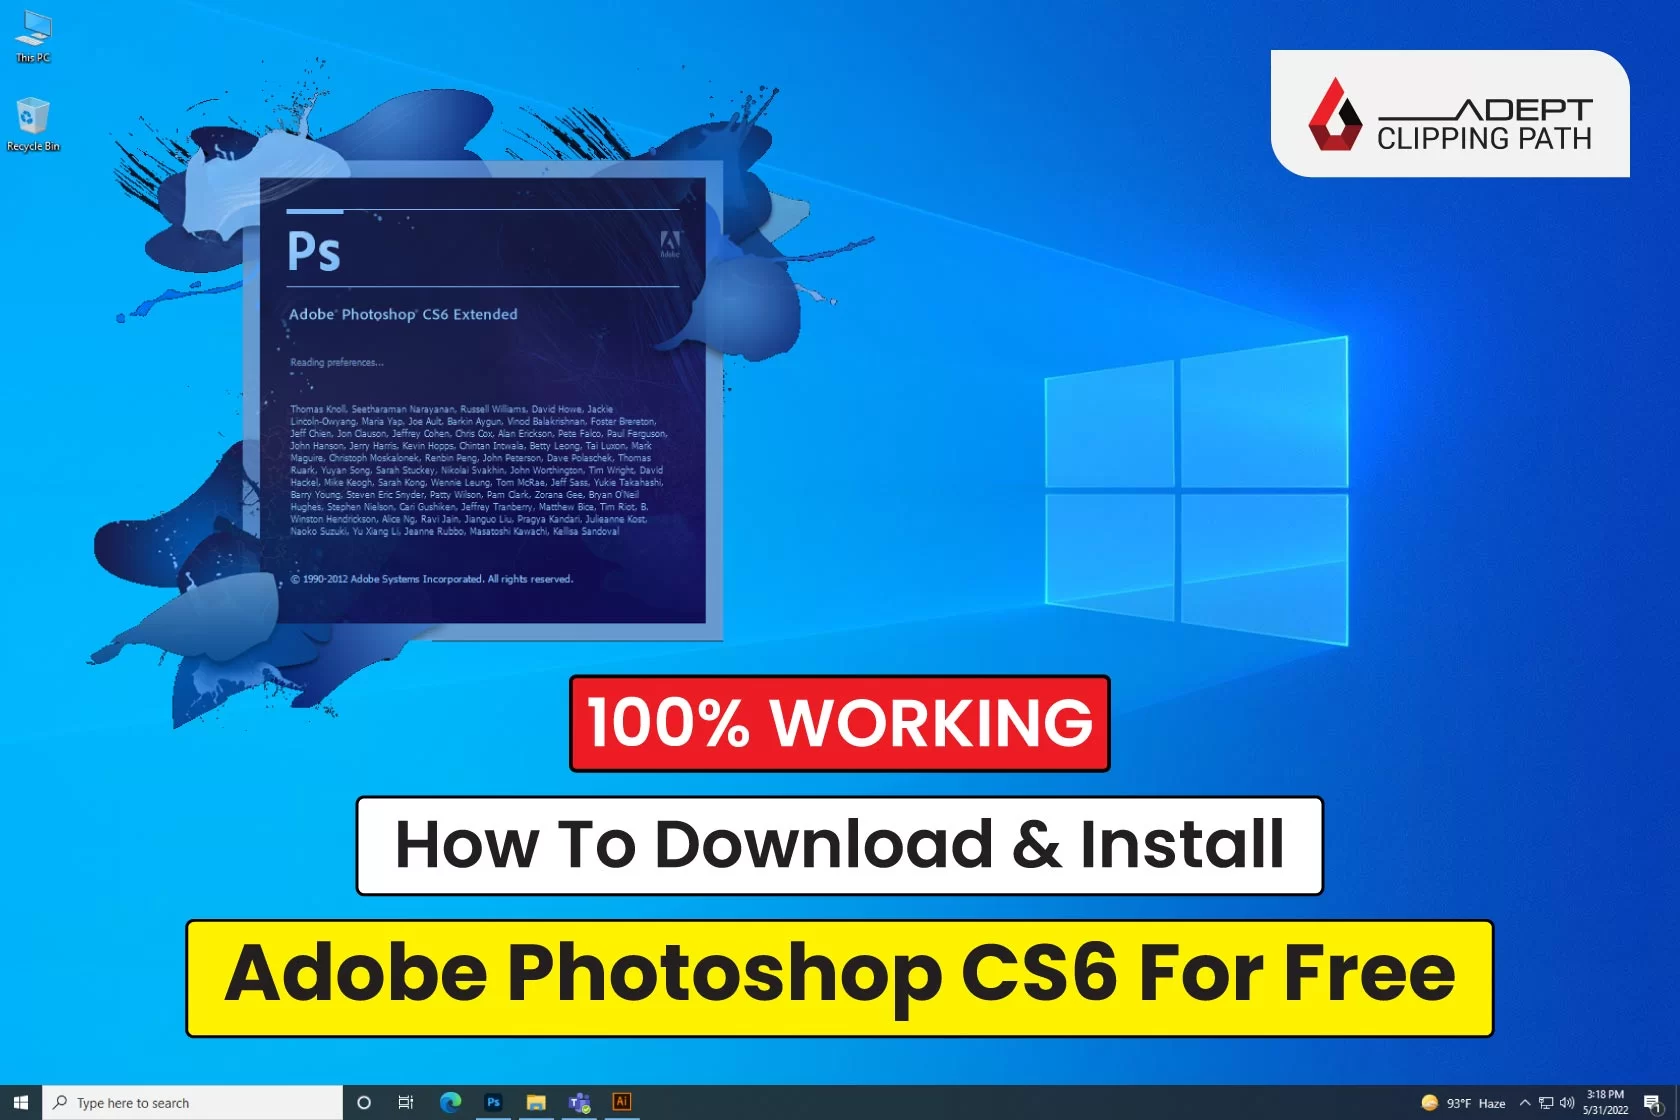 Adobe photoshop cs6 free trial download windows 7 download messenger app for windows 10